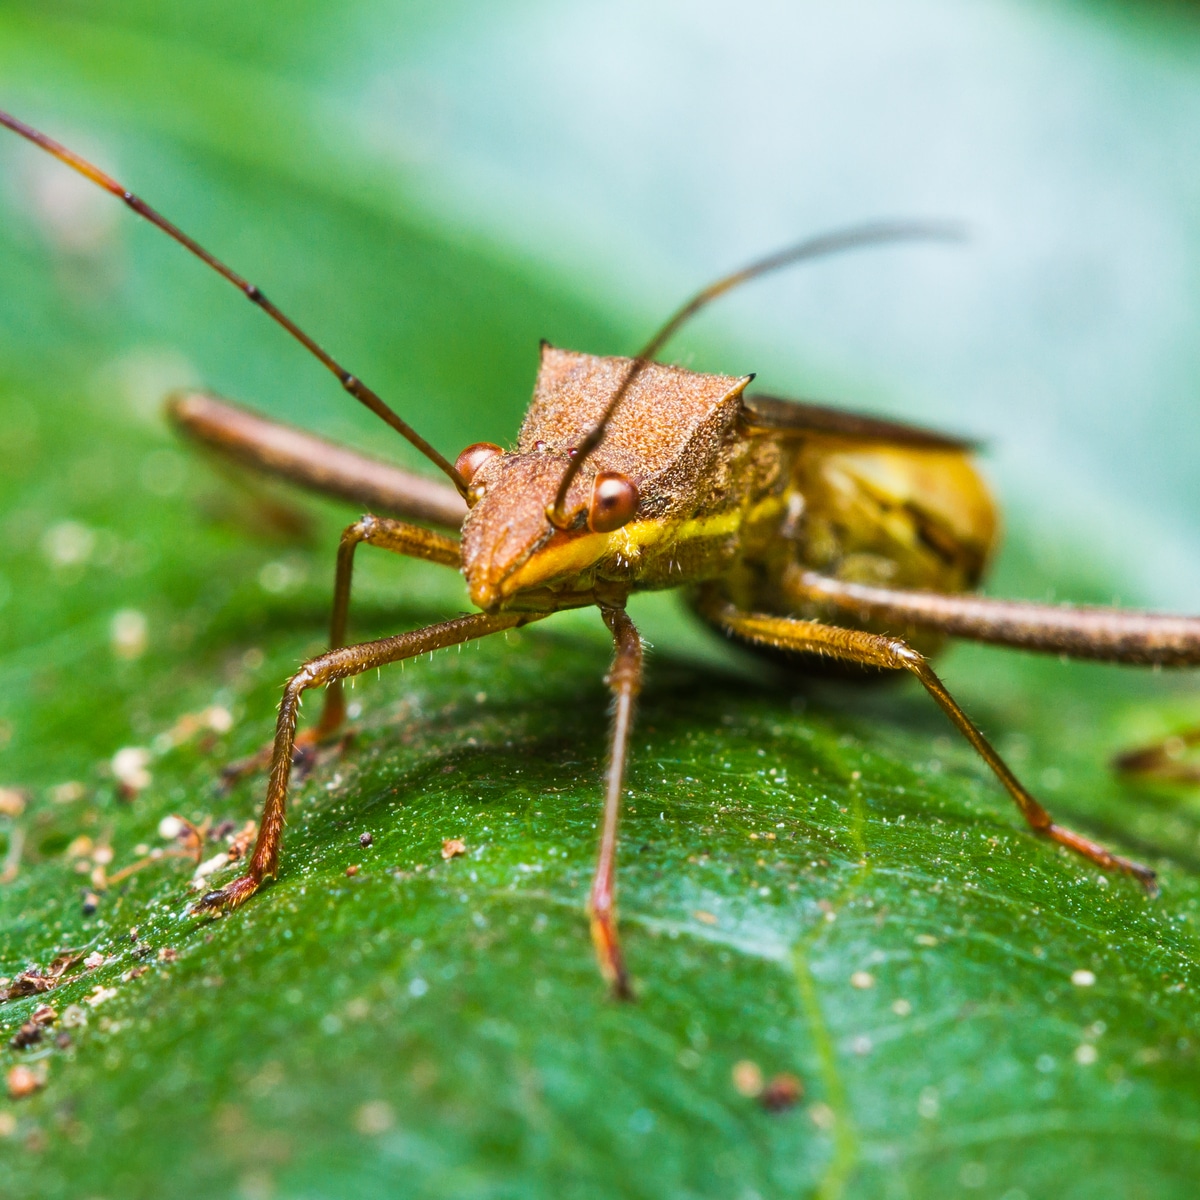 Assasin bug standing on a green leaf.